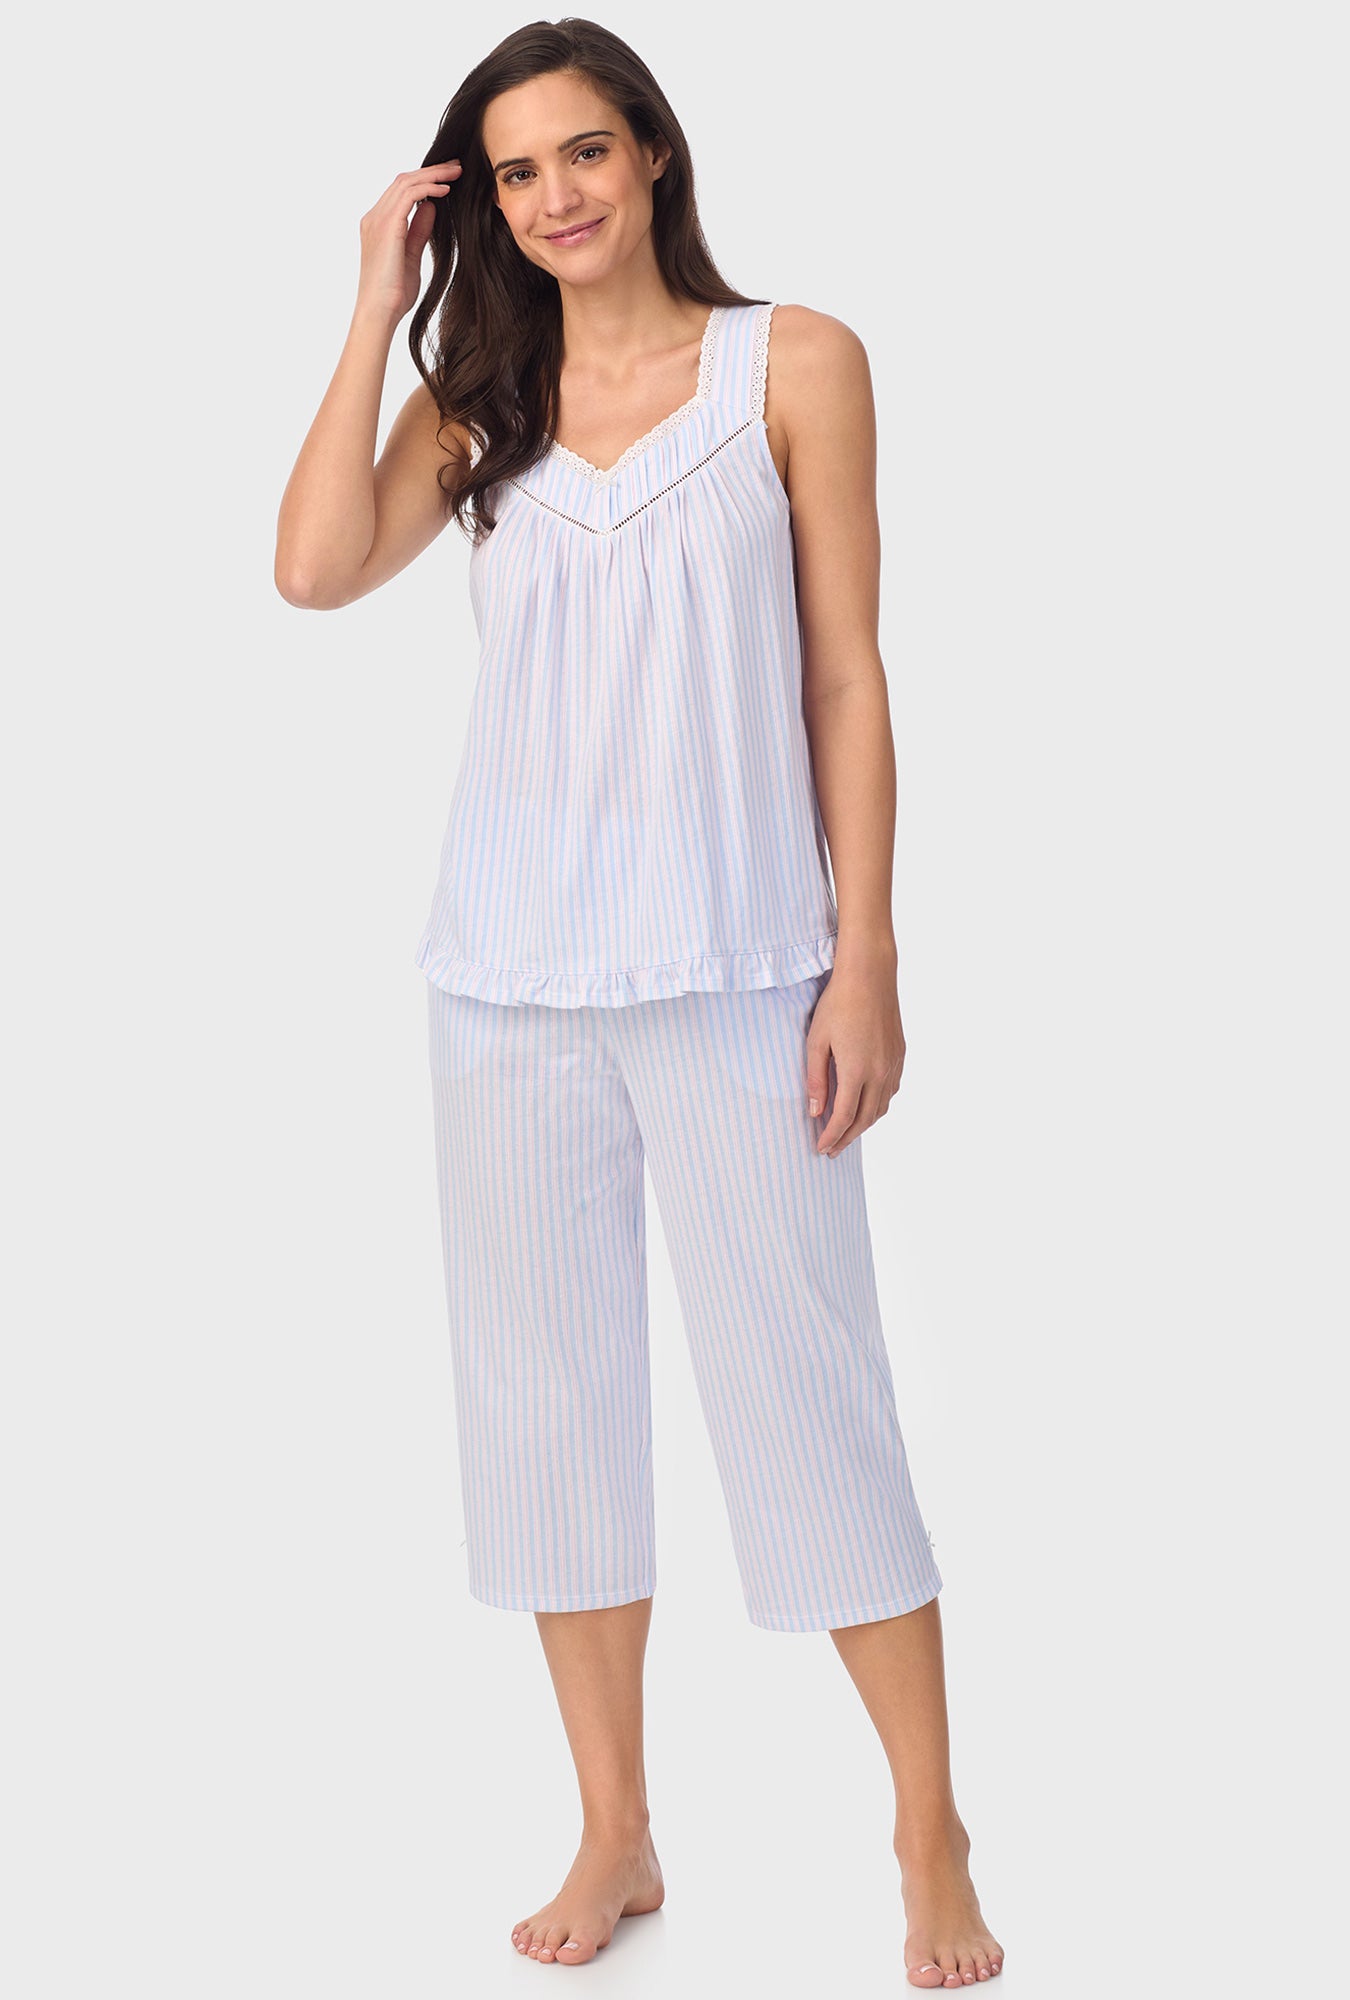 A lady wearing white sleeveless Blossom Stripes Sleeveless Capri Pant PJ Set with Cotton Blue print